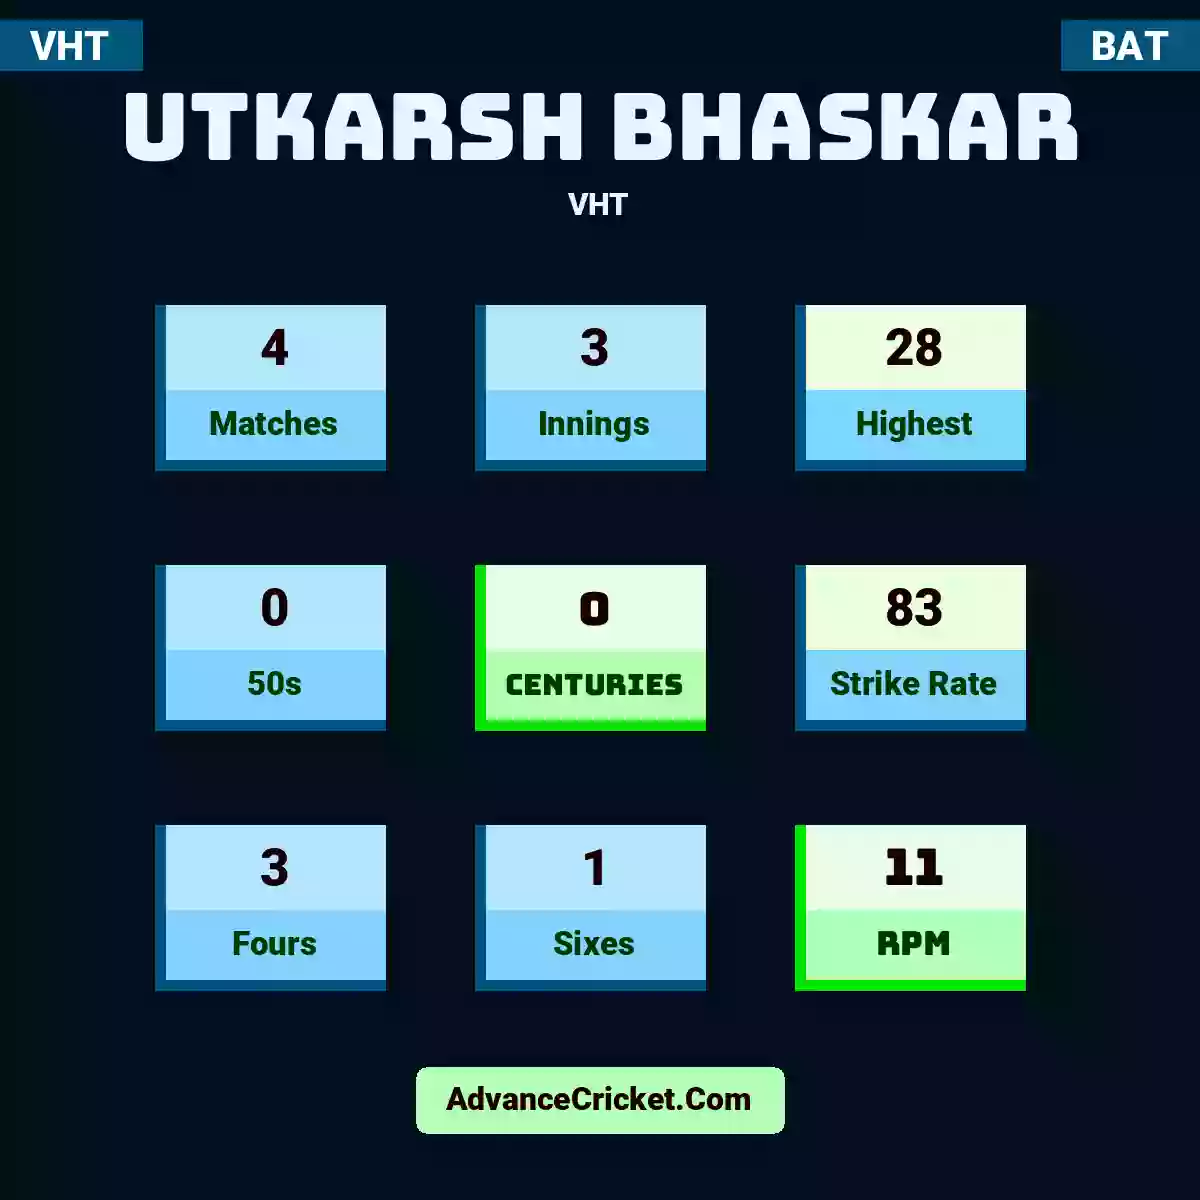 Utkarsh Bhaskar VHT , Utkarsh Bhaskar played 4 matches, scored 28 runs as highest, 0 half-centuries, and 0 centuries, with a strike rate of 83. U.Bhaskar hit 3 fours and 1 sixes, with an RPM of 11.